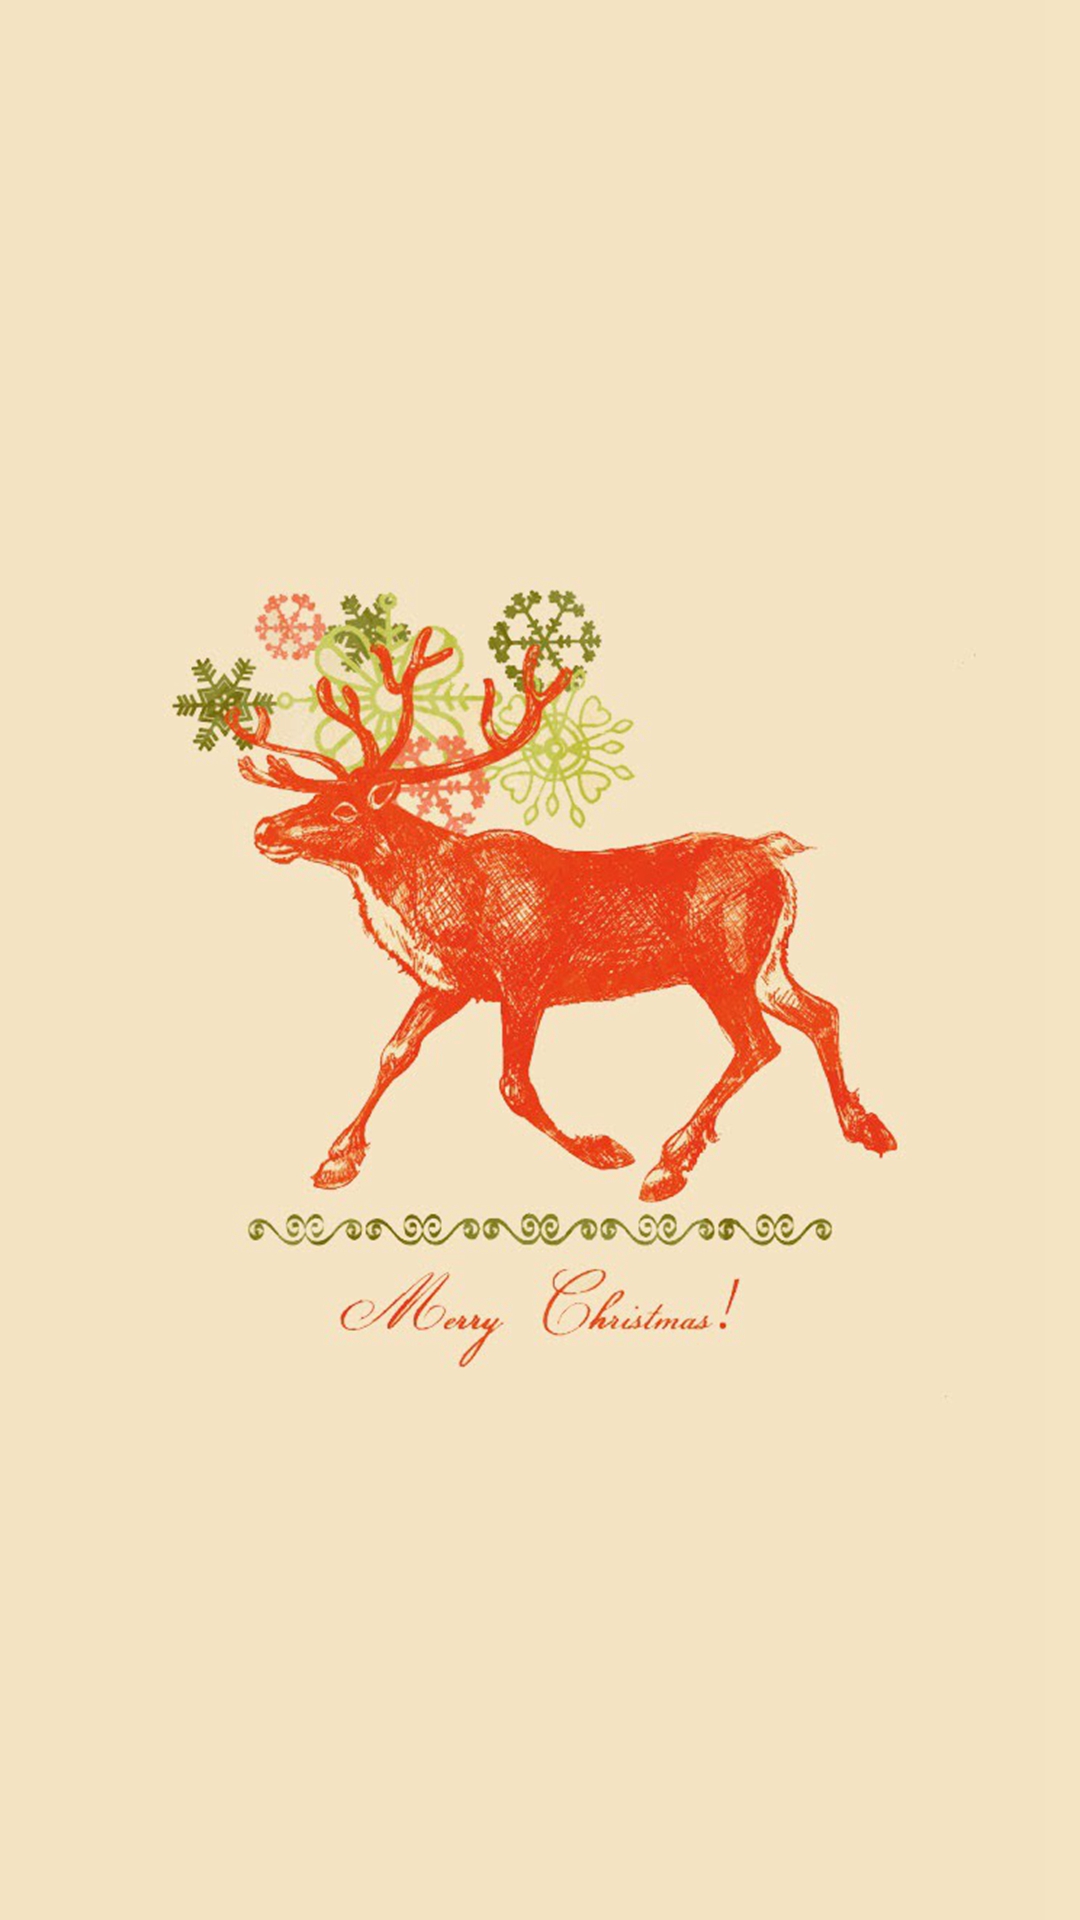 Merry Christmas Vintage Reindeer Illustration iPhone Christmas Phone Background